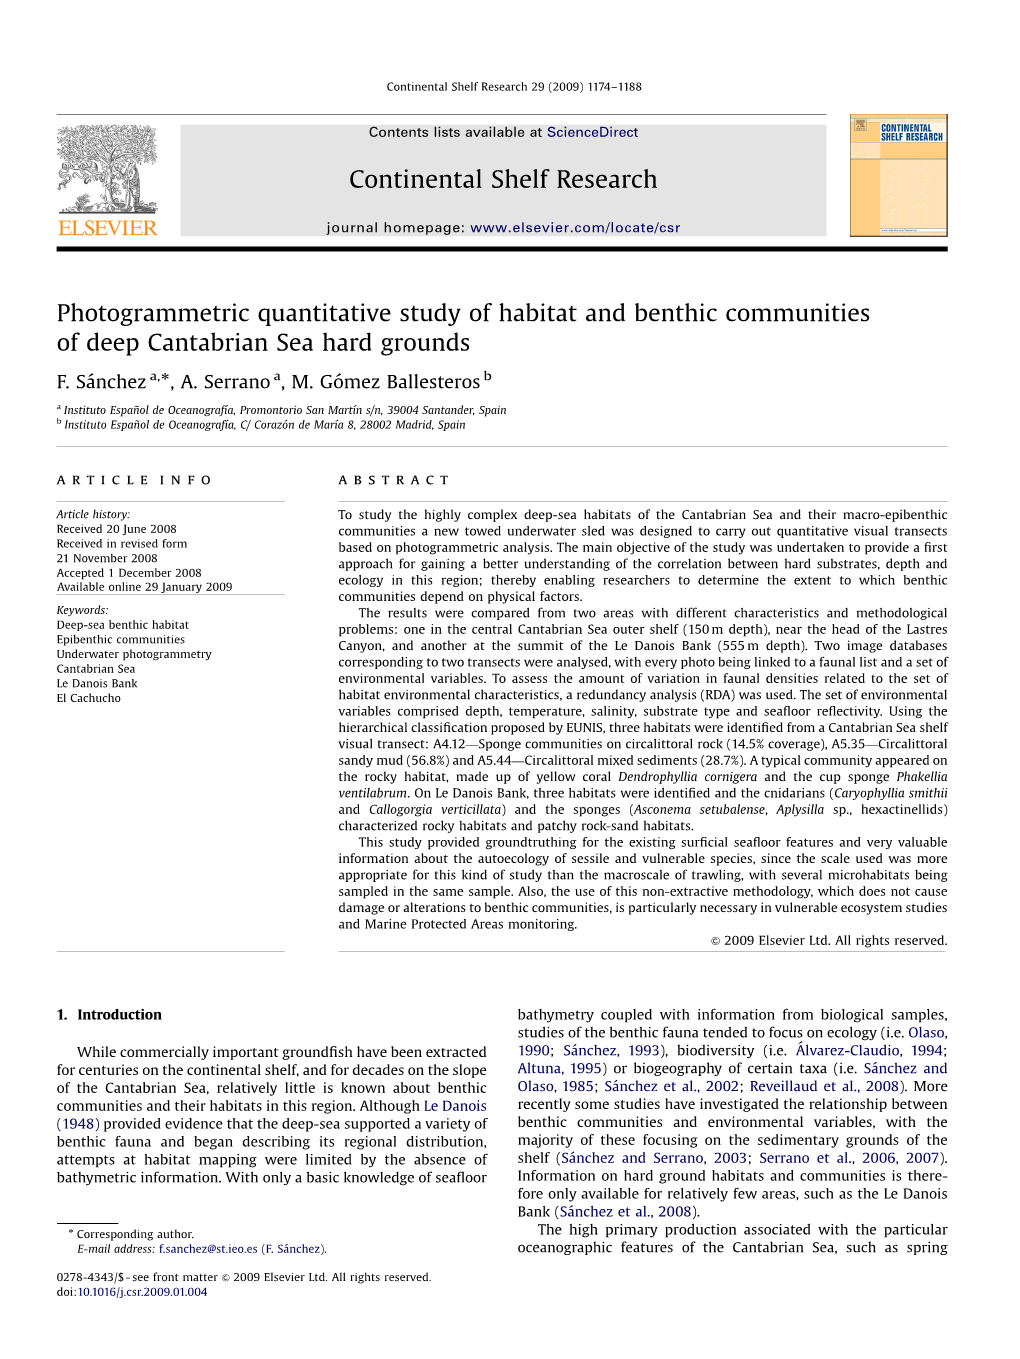 Photogrammetric Quantitative Study of Habitat and Benthic Communities of Deep Cantabrian Sea Hard Grounds